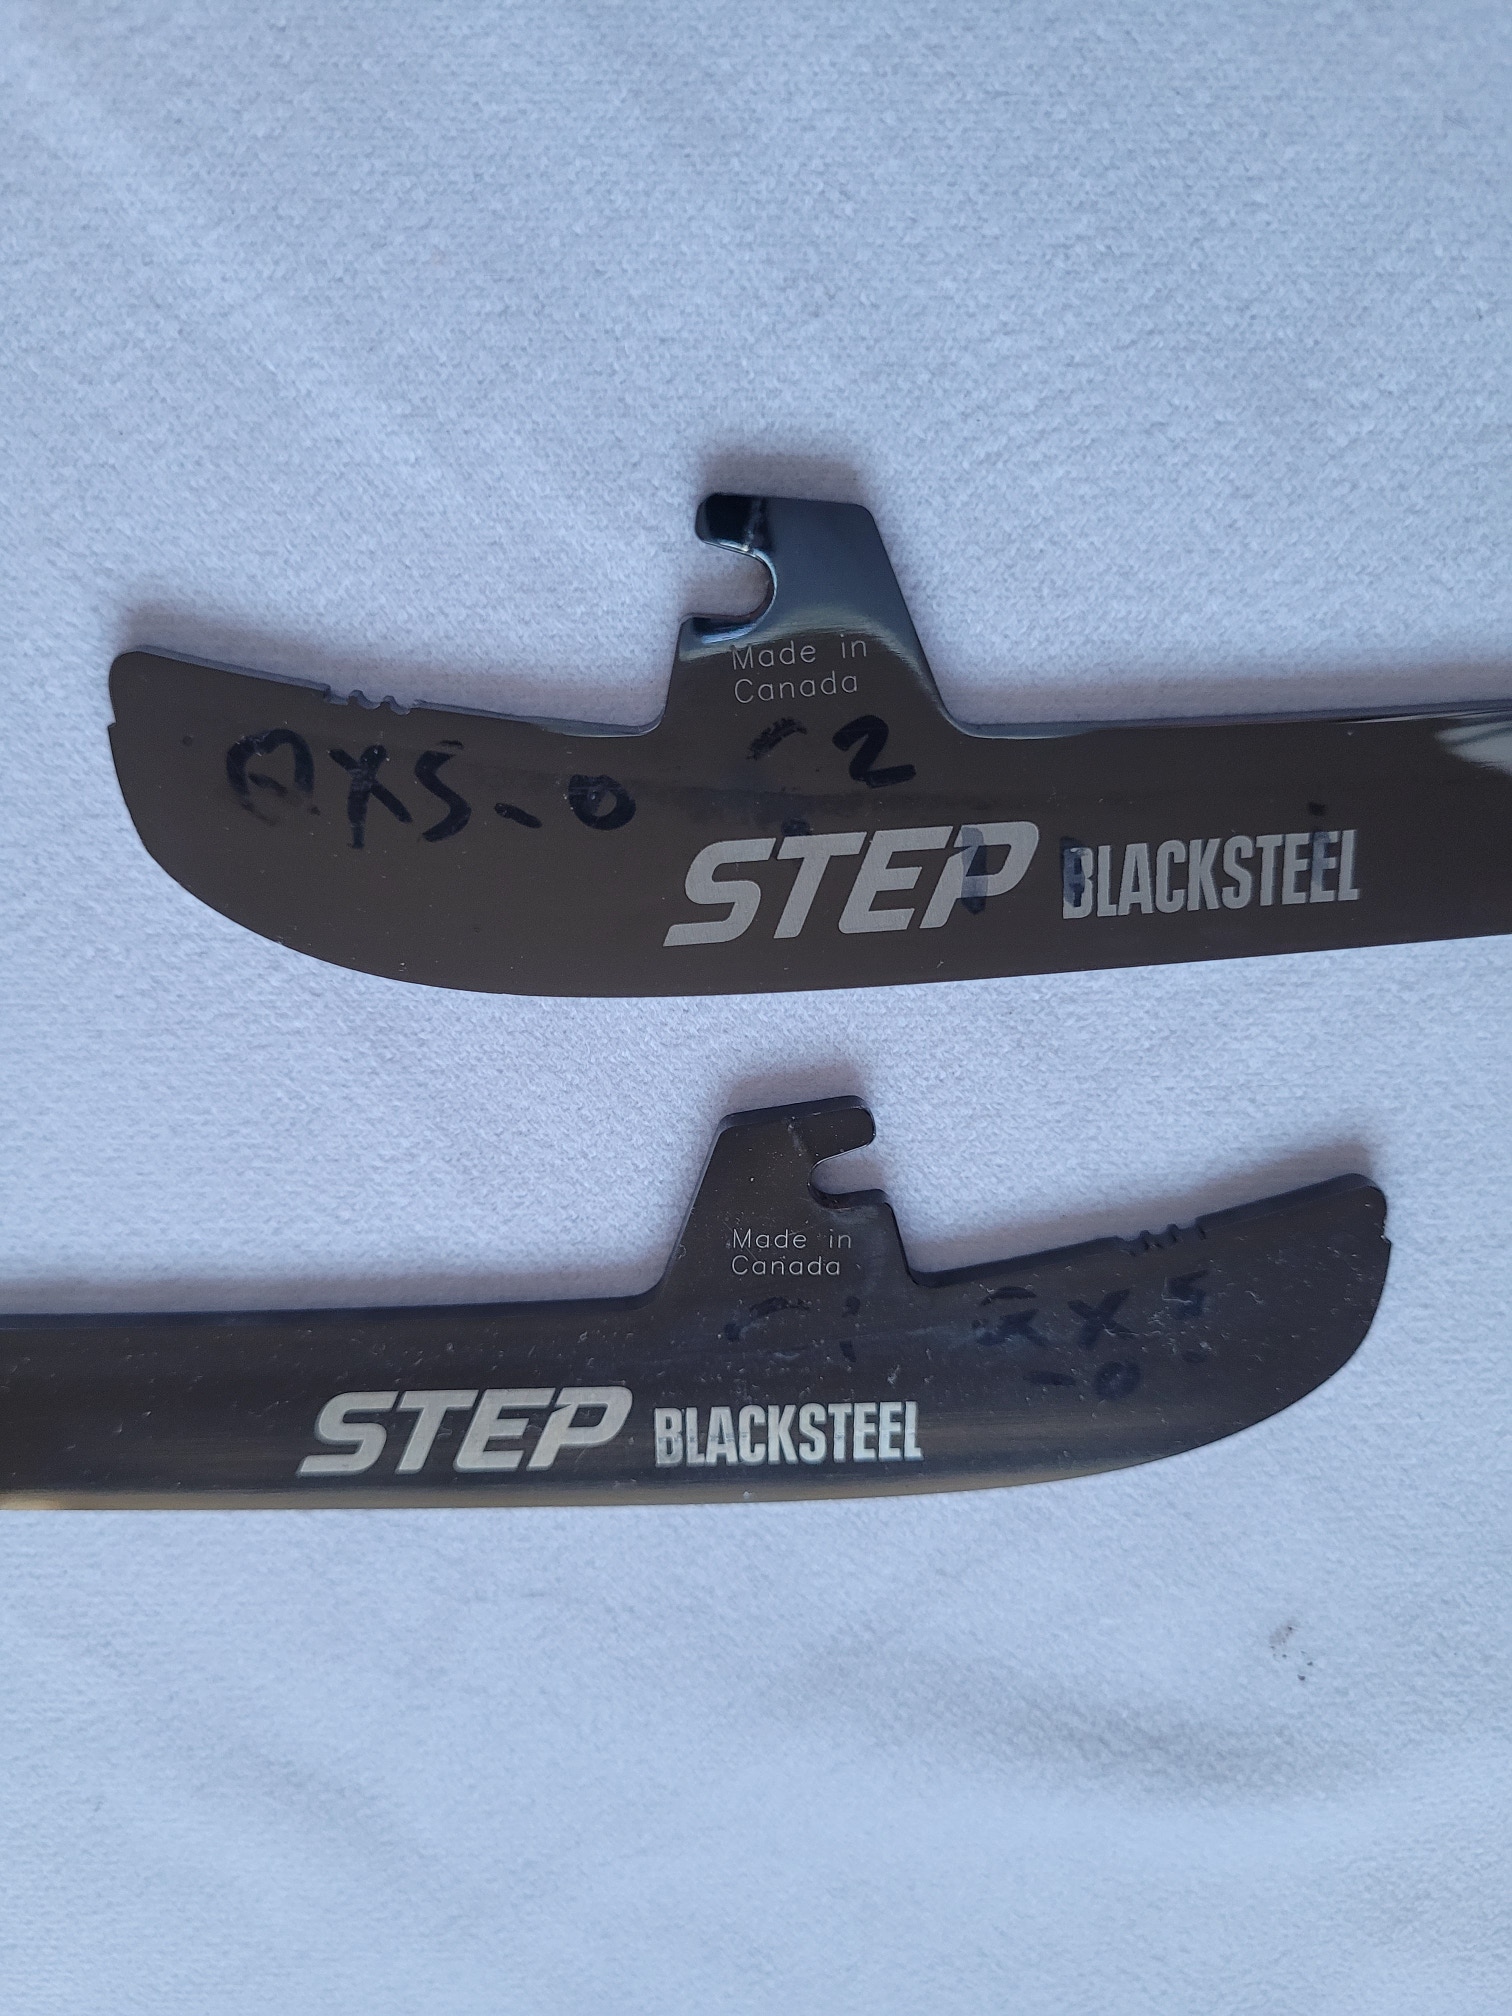 STEP BlackSteel 247mm Quad XS profile (6' - 8' - 11' - 12') for CCM XS holders